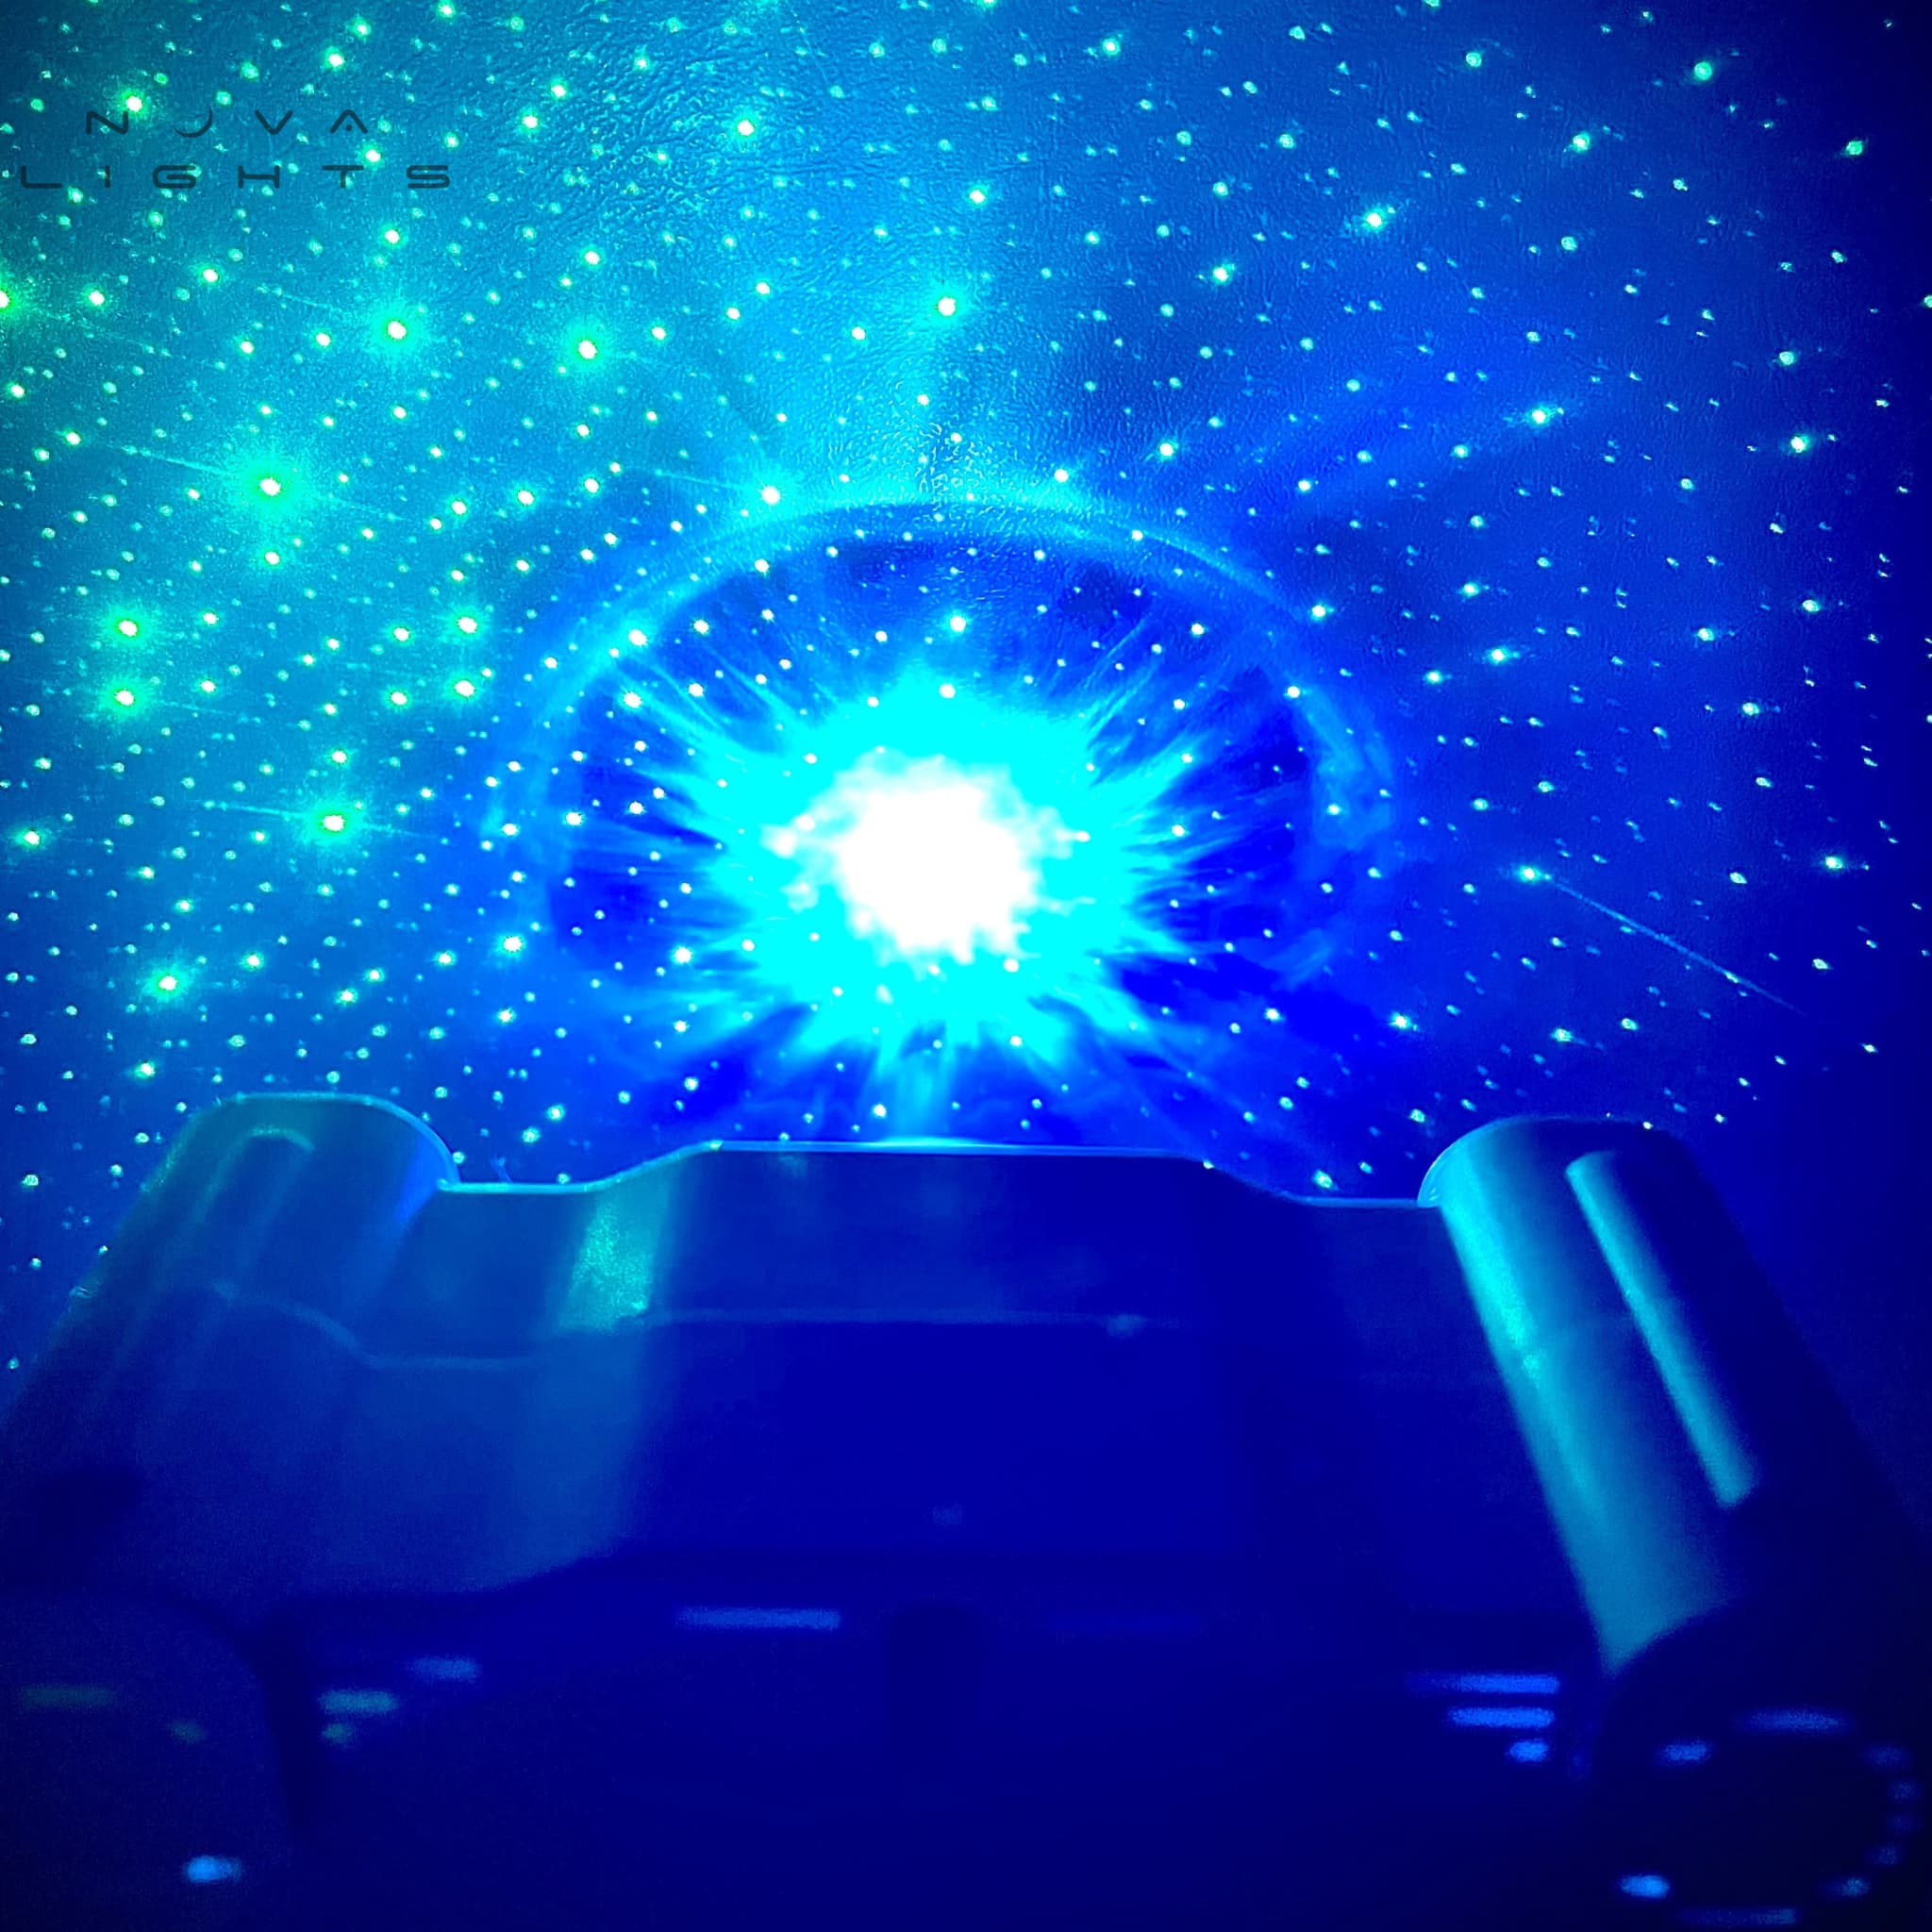 Sinowe™ - Astronaut Galaxy Projector